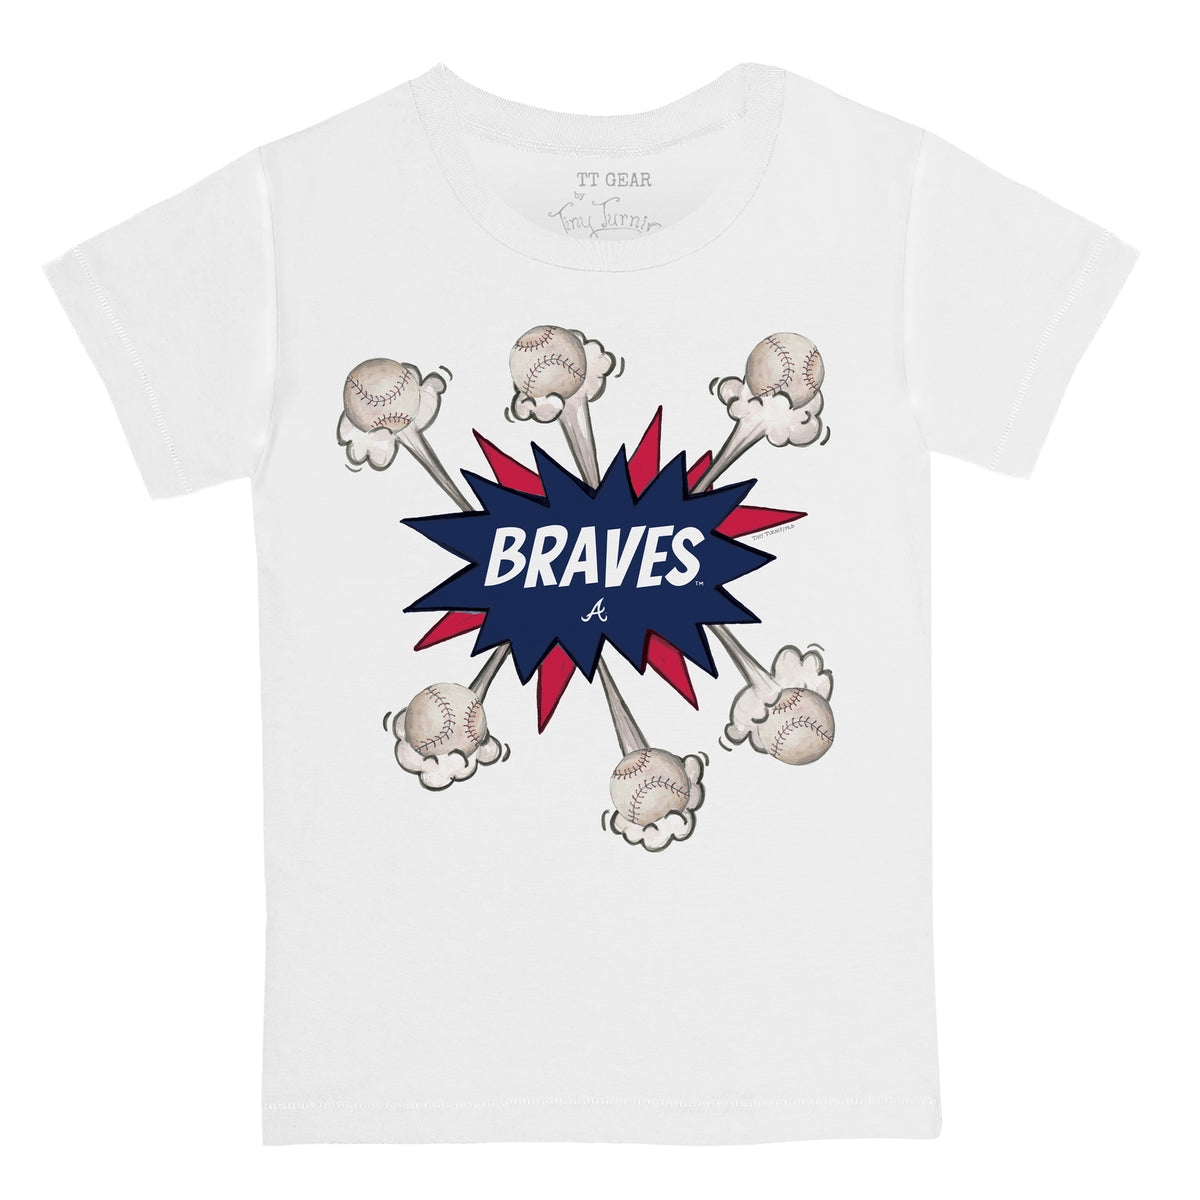 Atlanta Braves Baseball Pow Tee Shirt